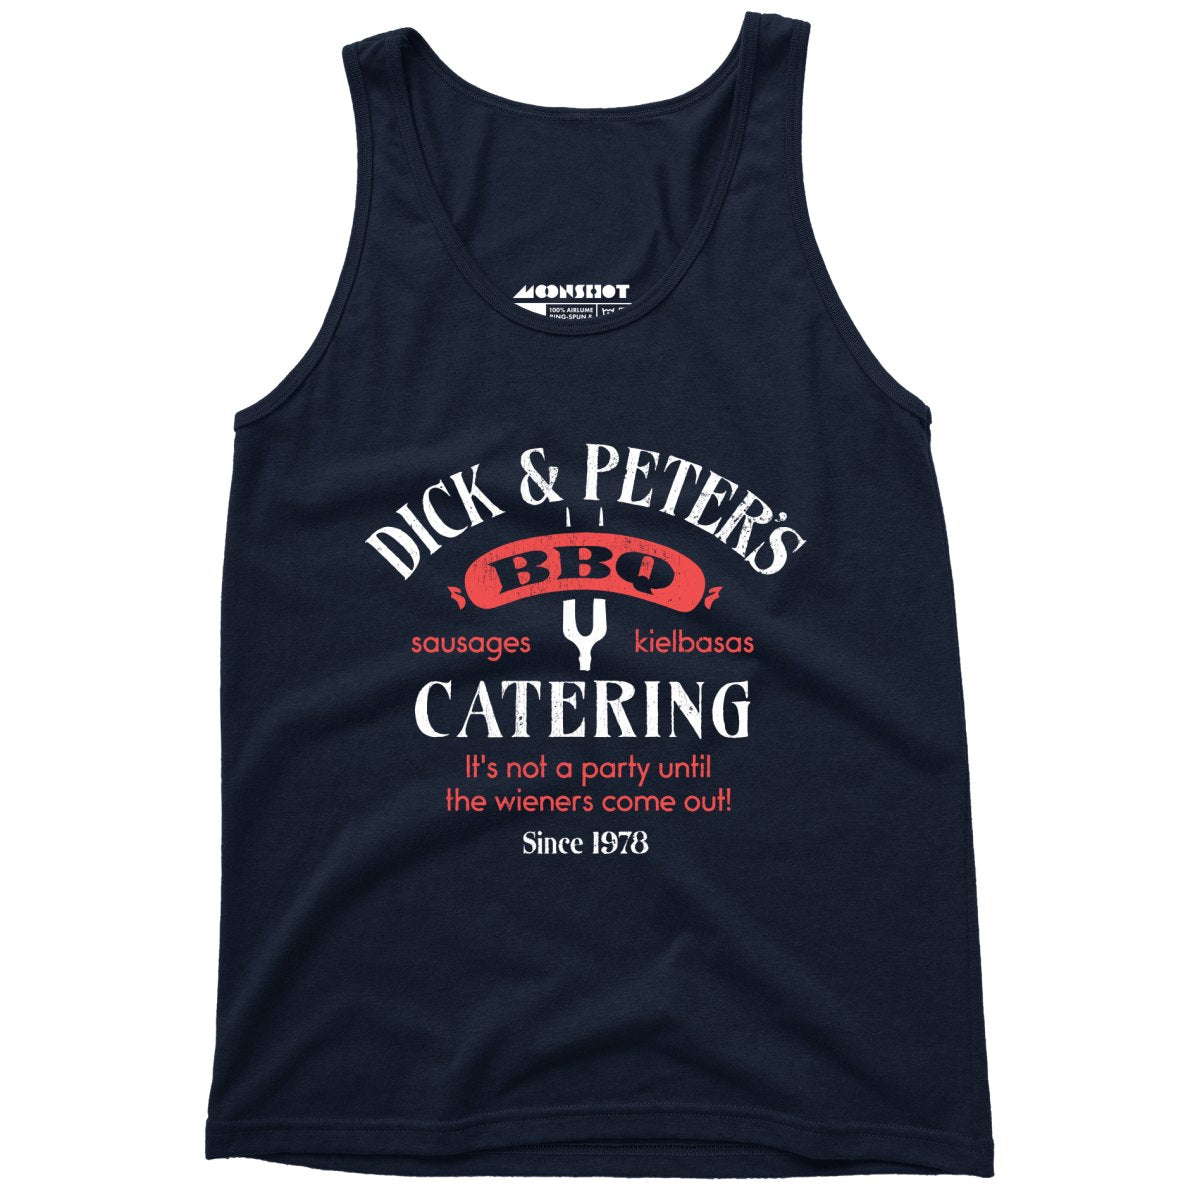 Dick & Peter's BBQ Catering - Unisex Tank Top